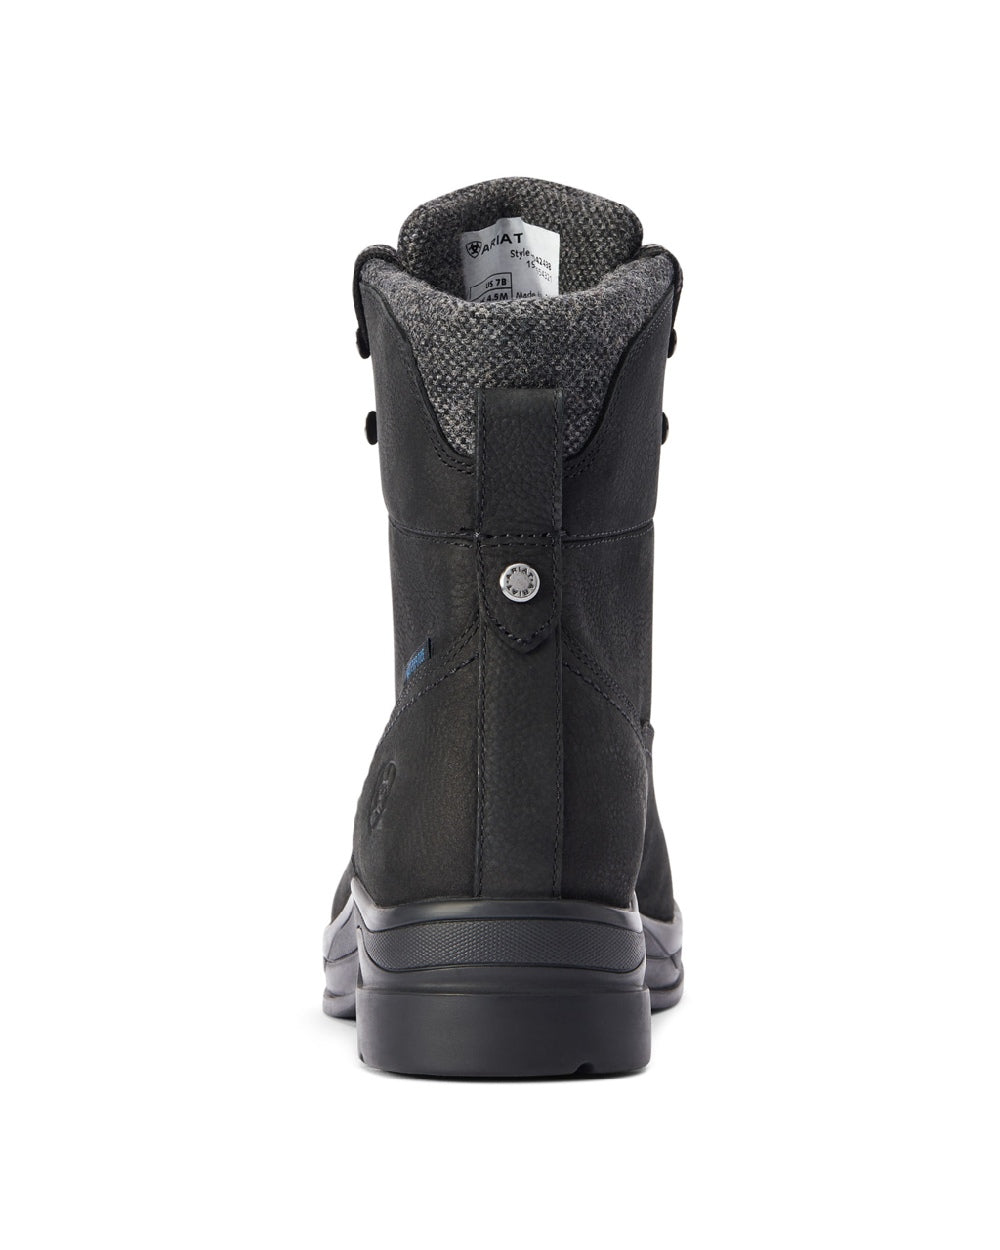 Ariat Womens Harper Waterproof Boots in Charcoal 